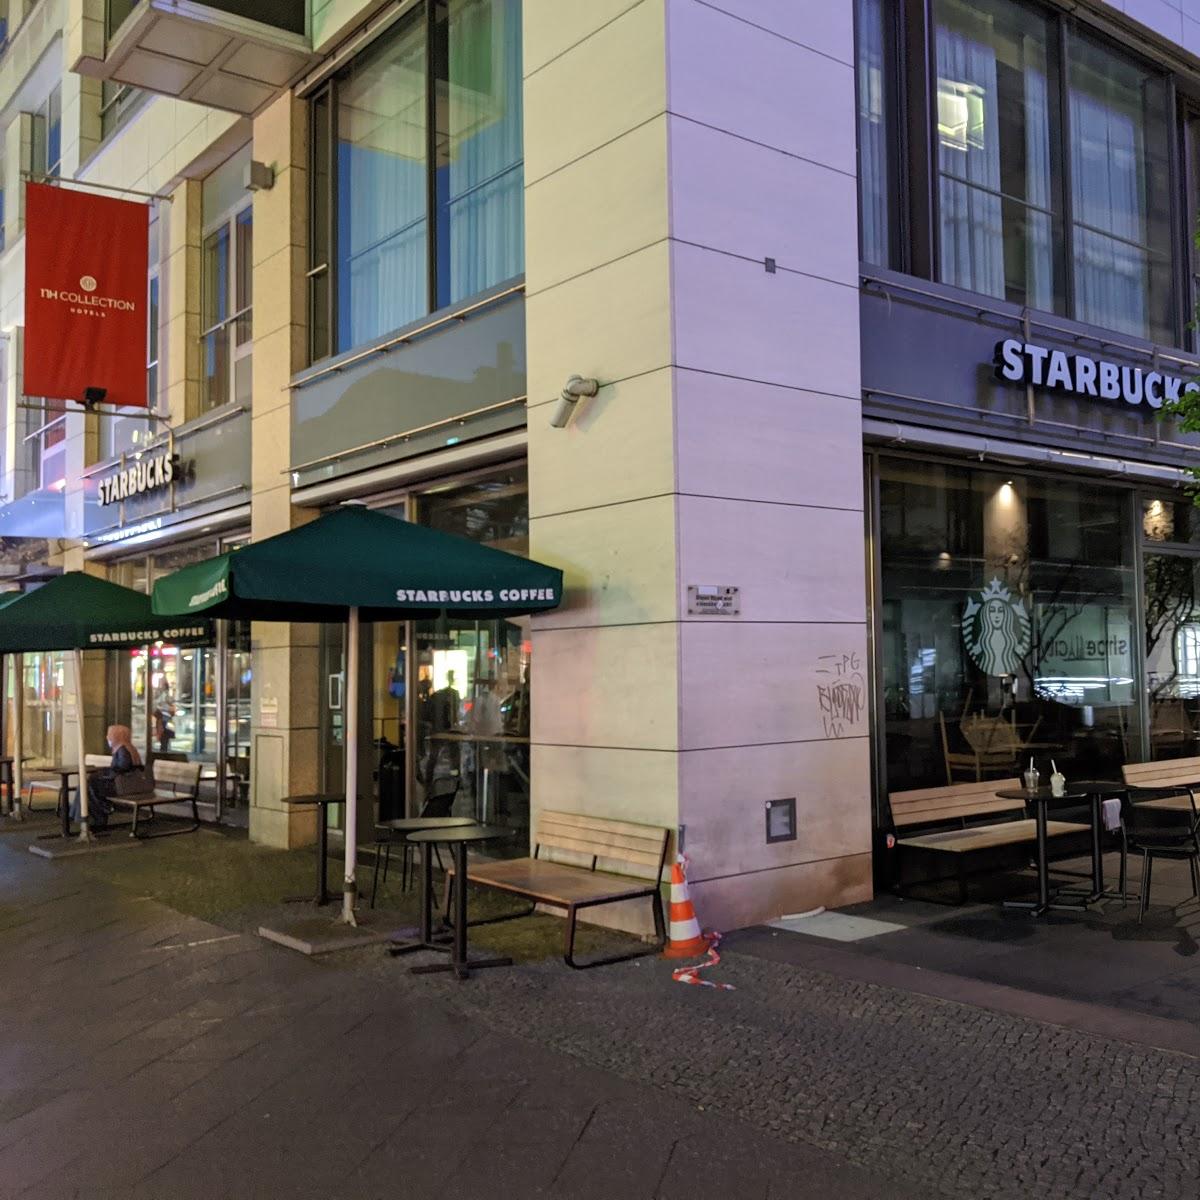 Restaurant "Starbucks" in Berlin